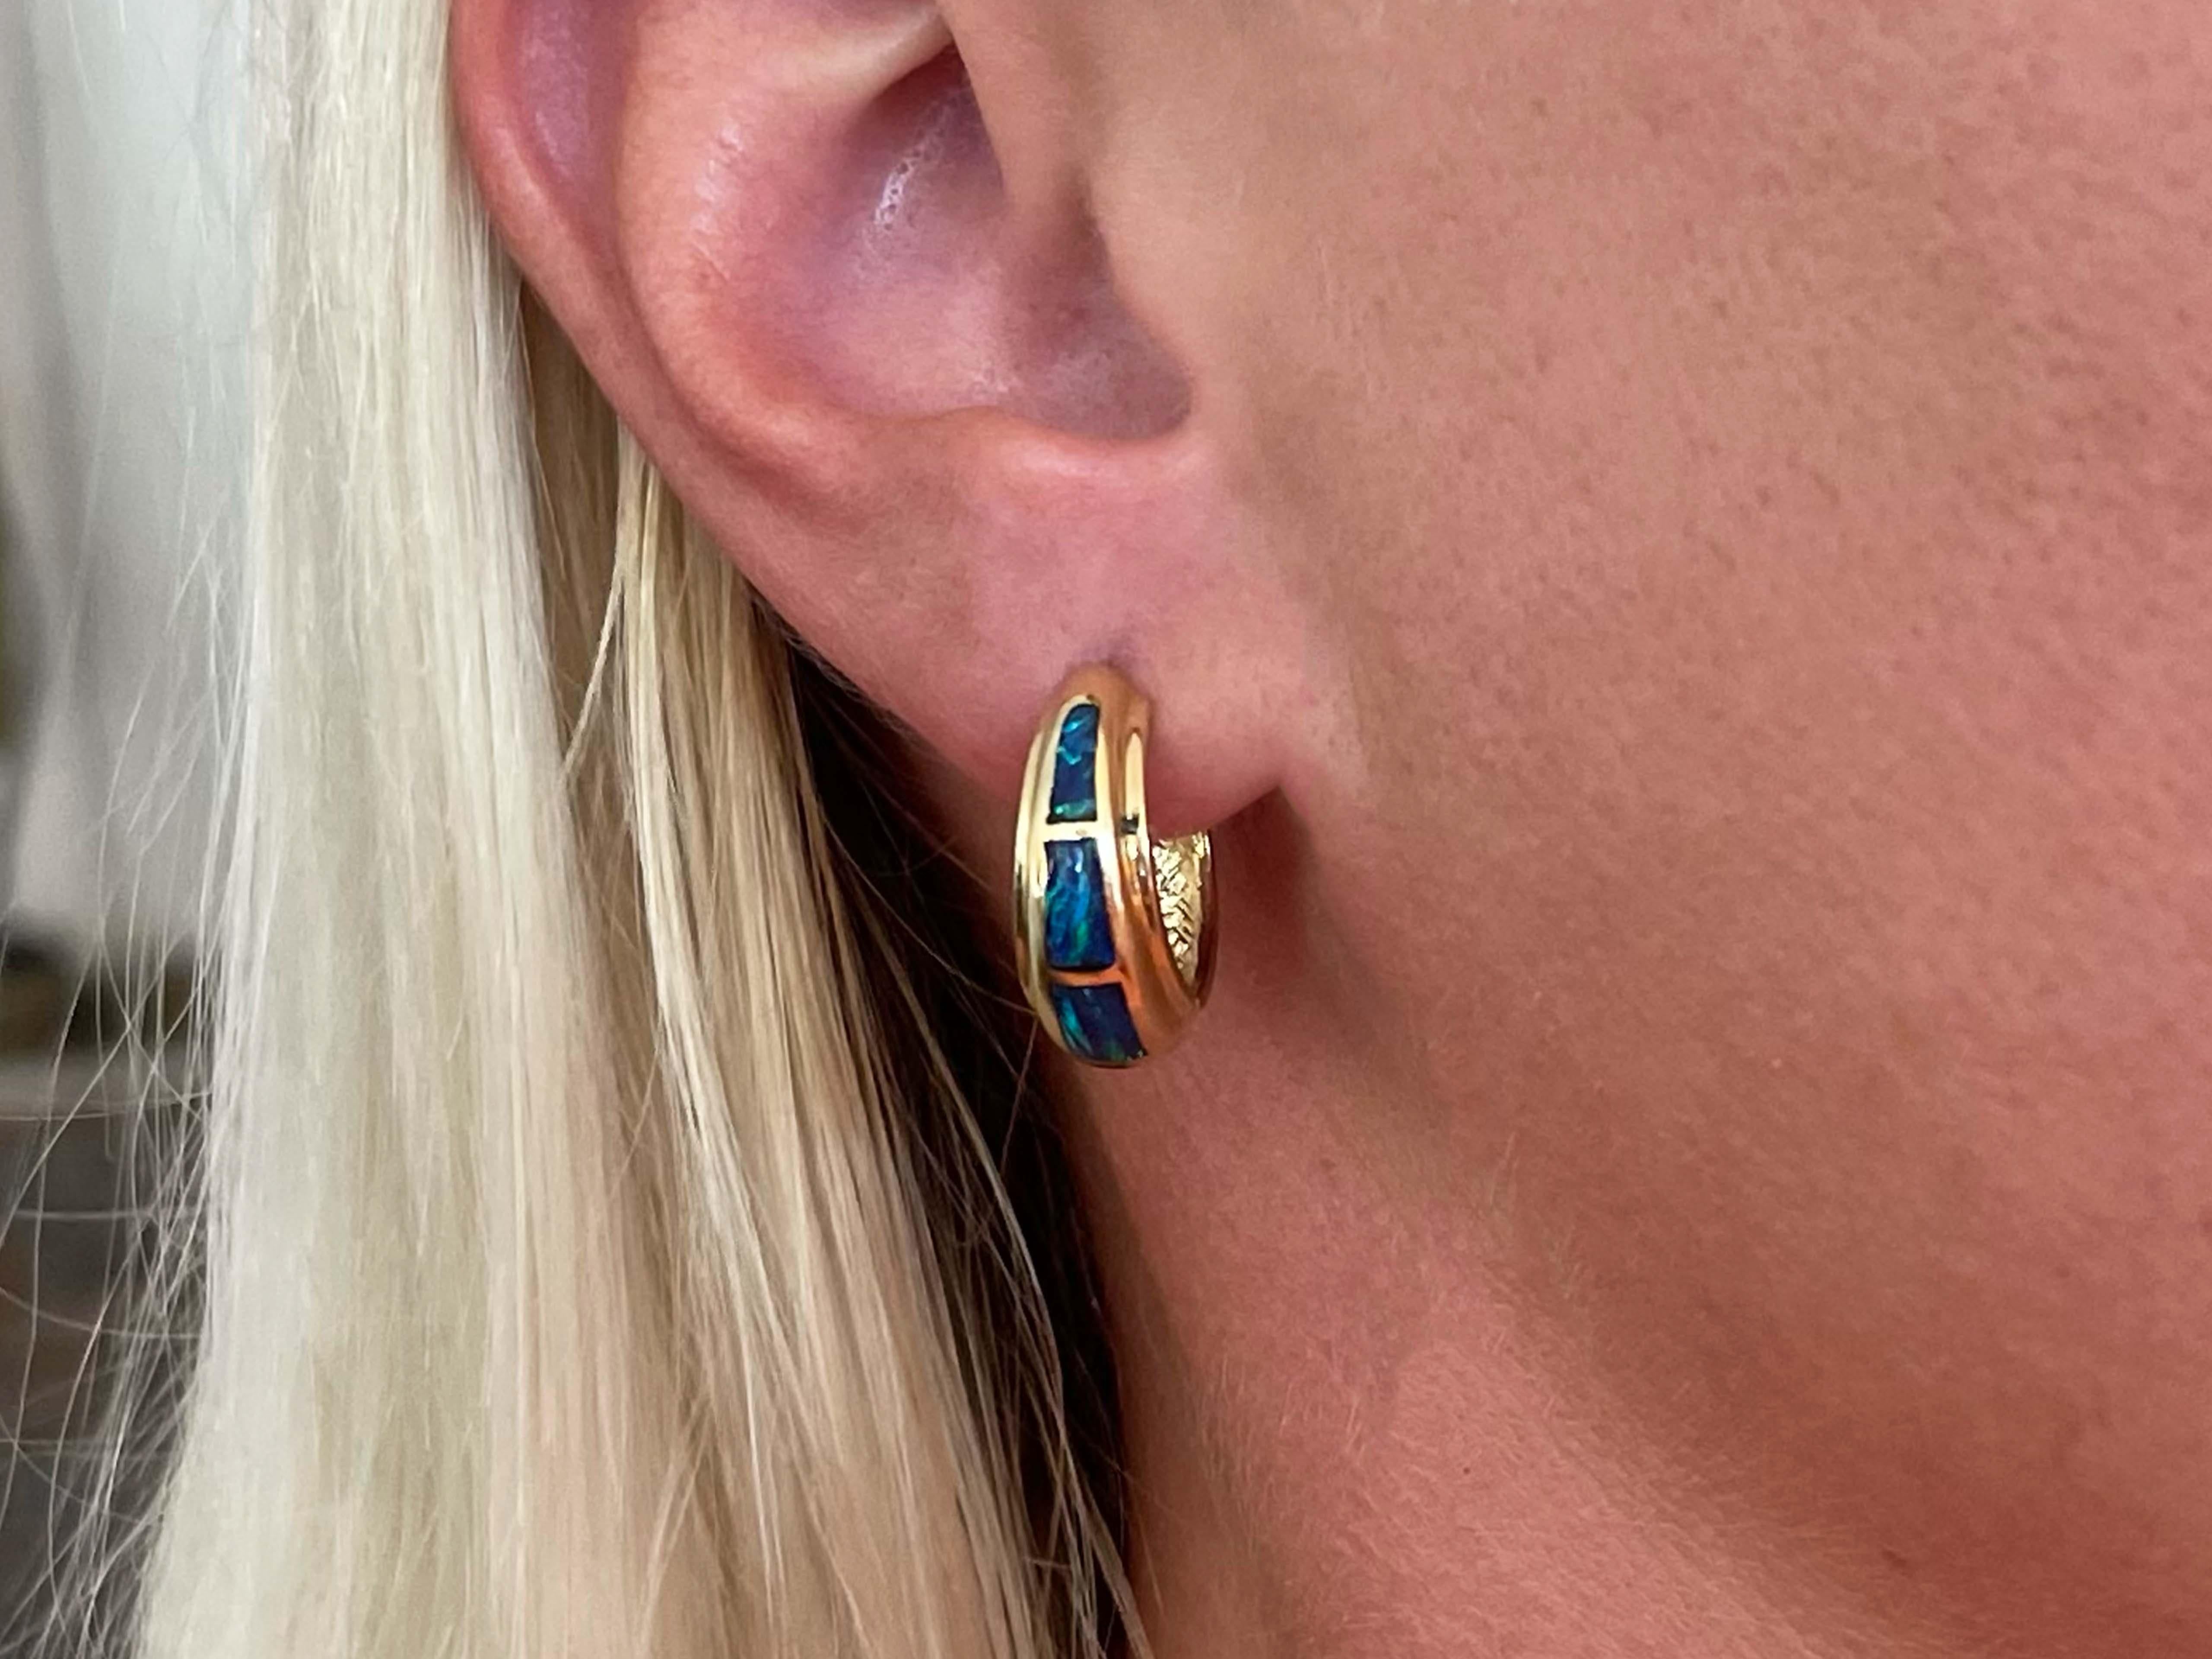 Earrings Specifications:

Metal: 14k Yellow Gold

Earring Diameter: 19 mm
​
​Gemstone Inlay: Black Opal

Total Weight: 9 Grams

Stamped: 